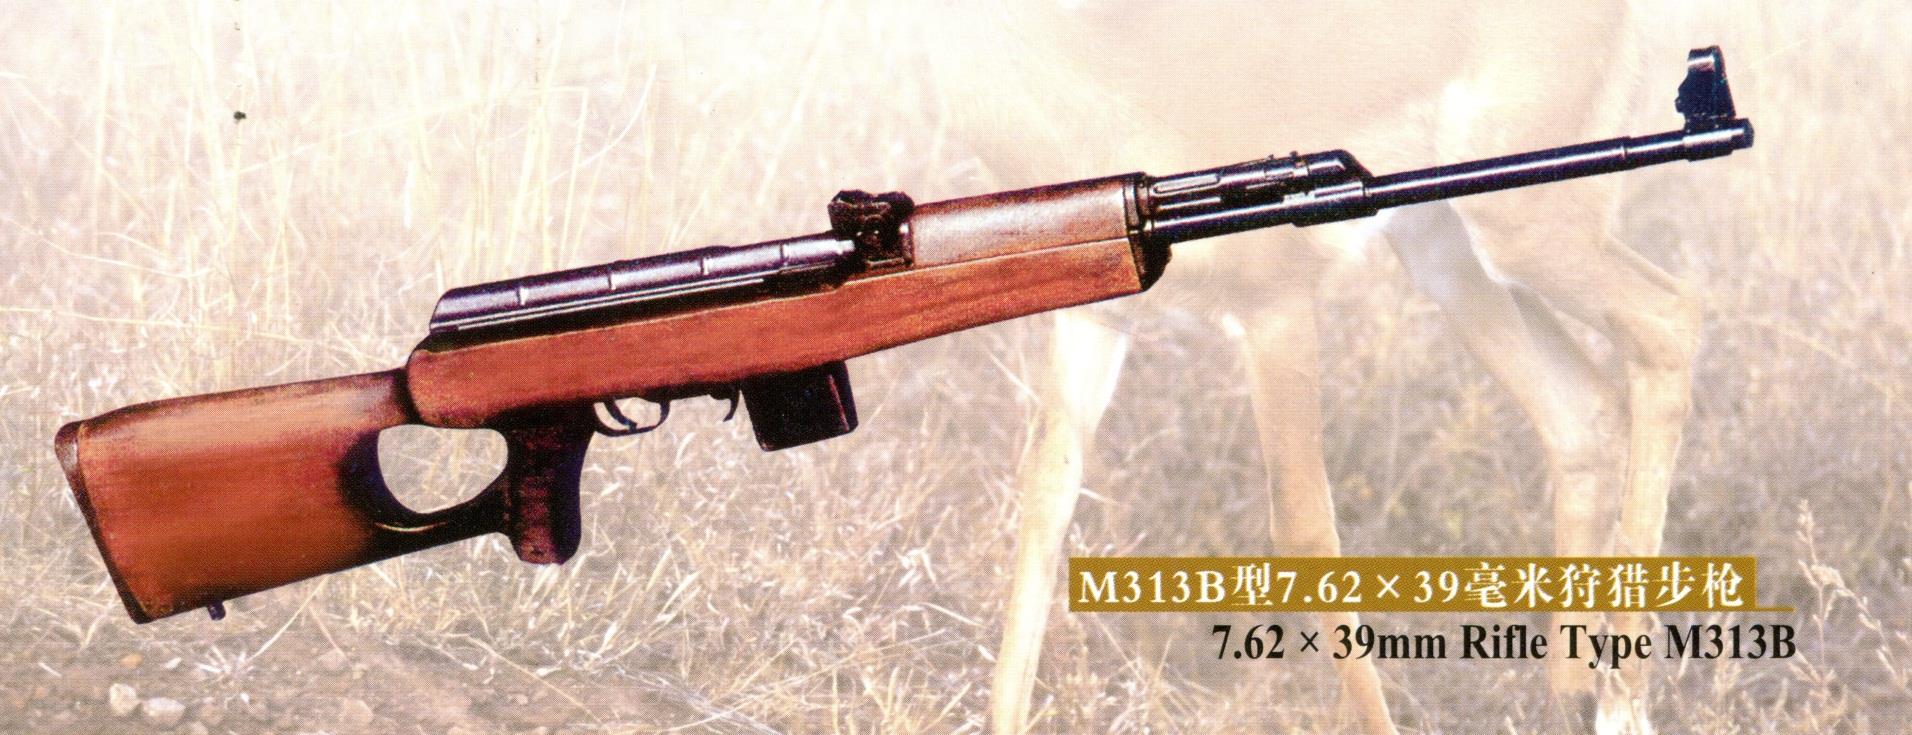 Norinco Model M313B